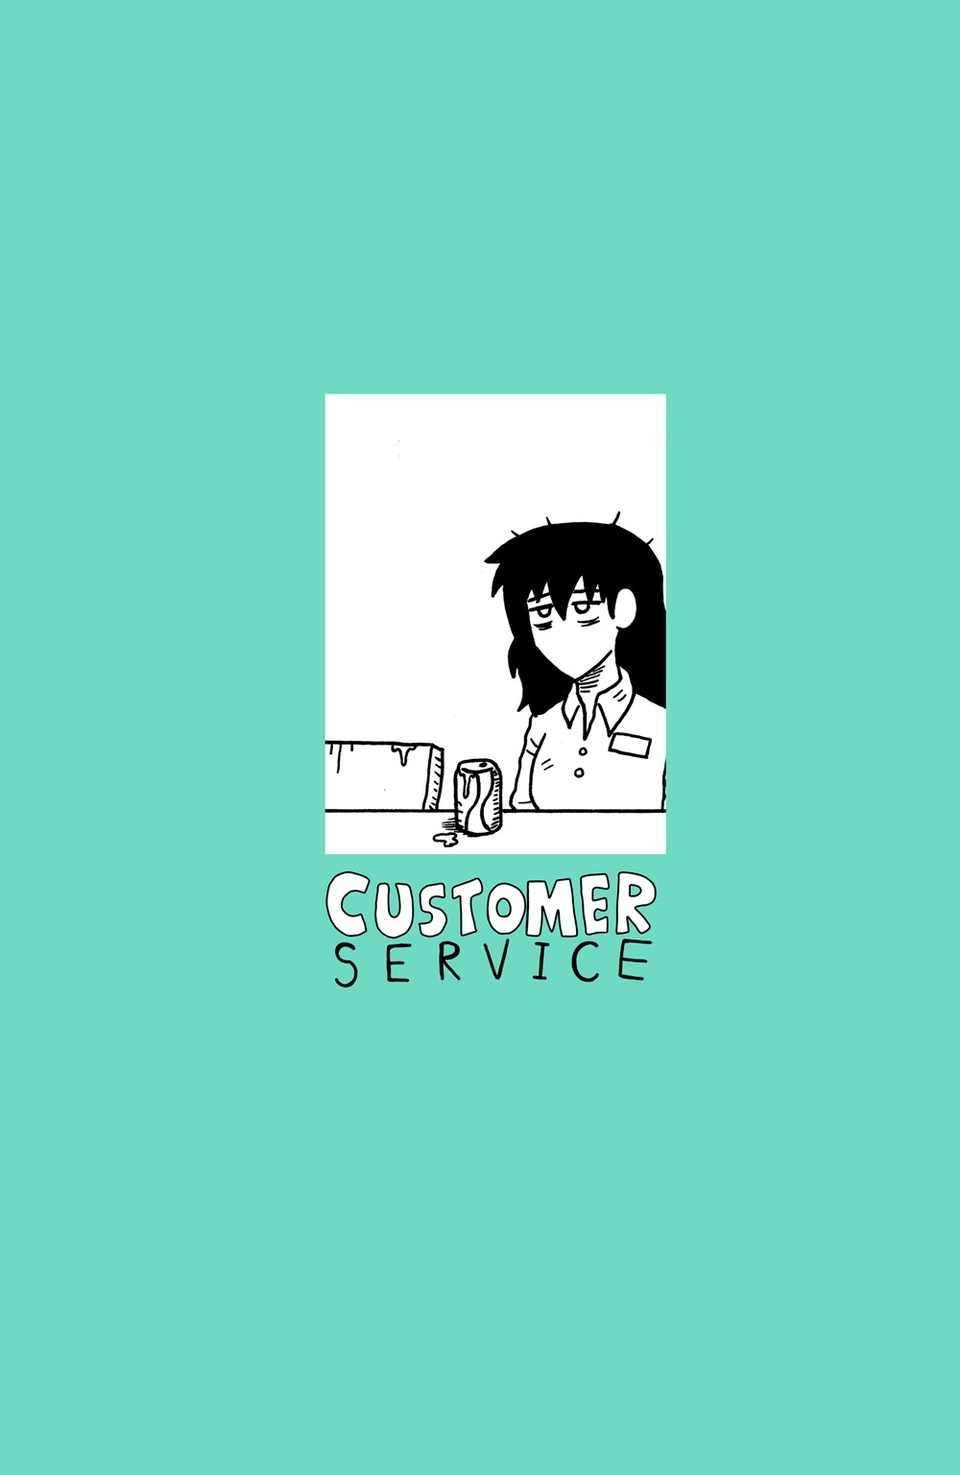 Customer service announcement!